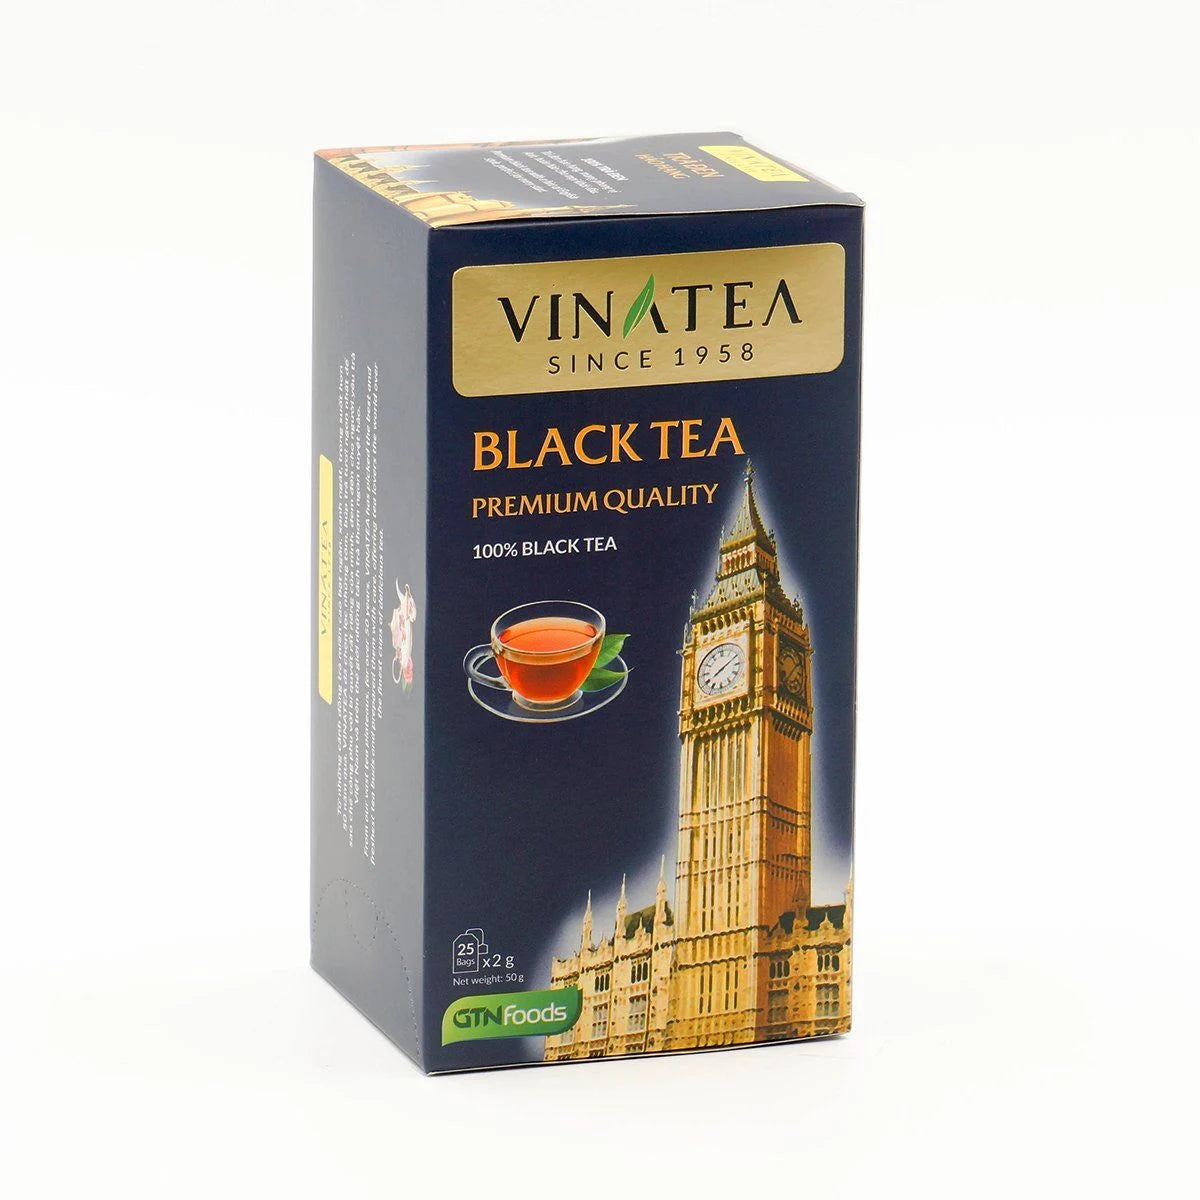 Vinatea Vietnamese Herbal Tea – Naturally Refreshing For Your Daily Life